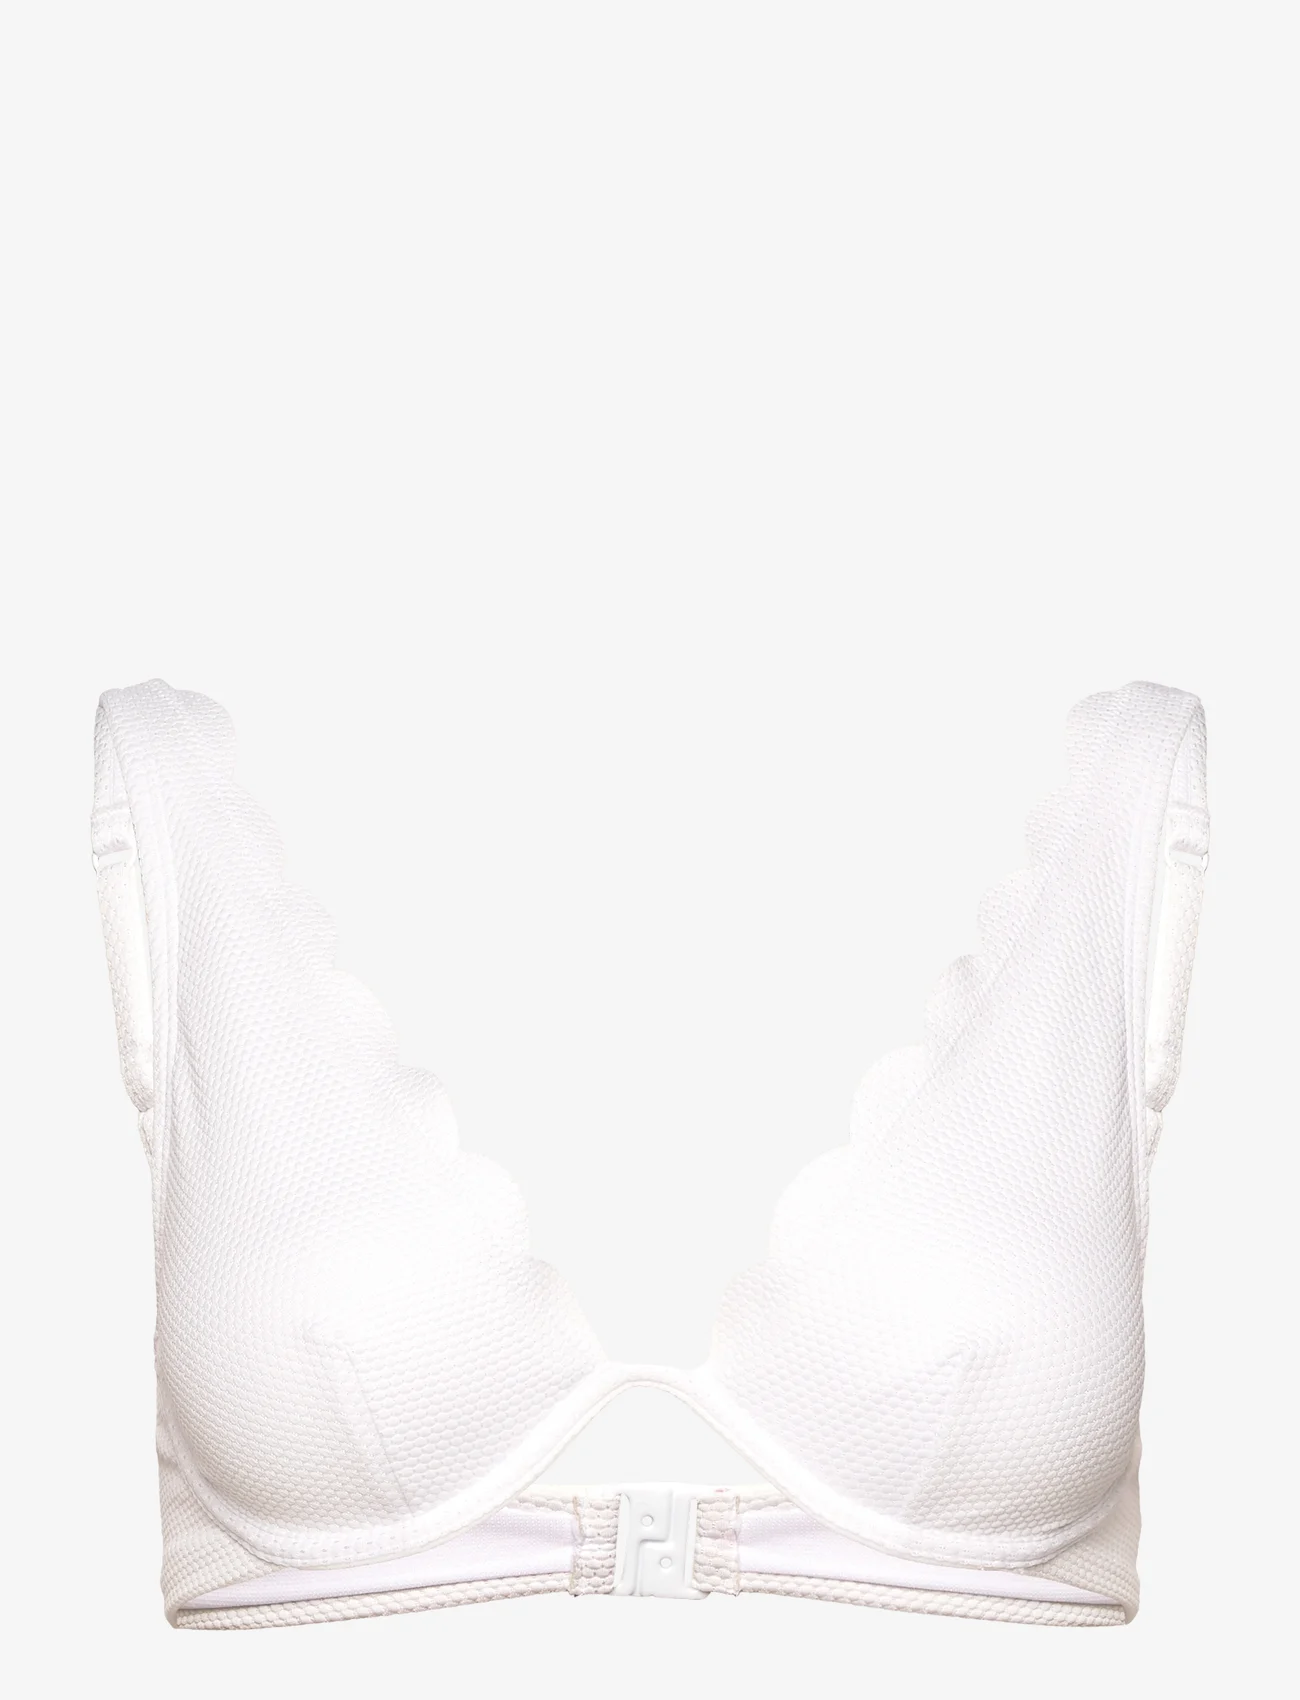 Hunkemöller - Scallop CW up - triangle bikini - white - 0